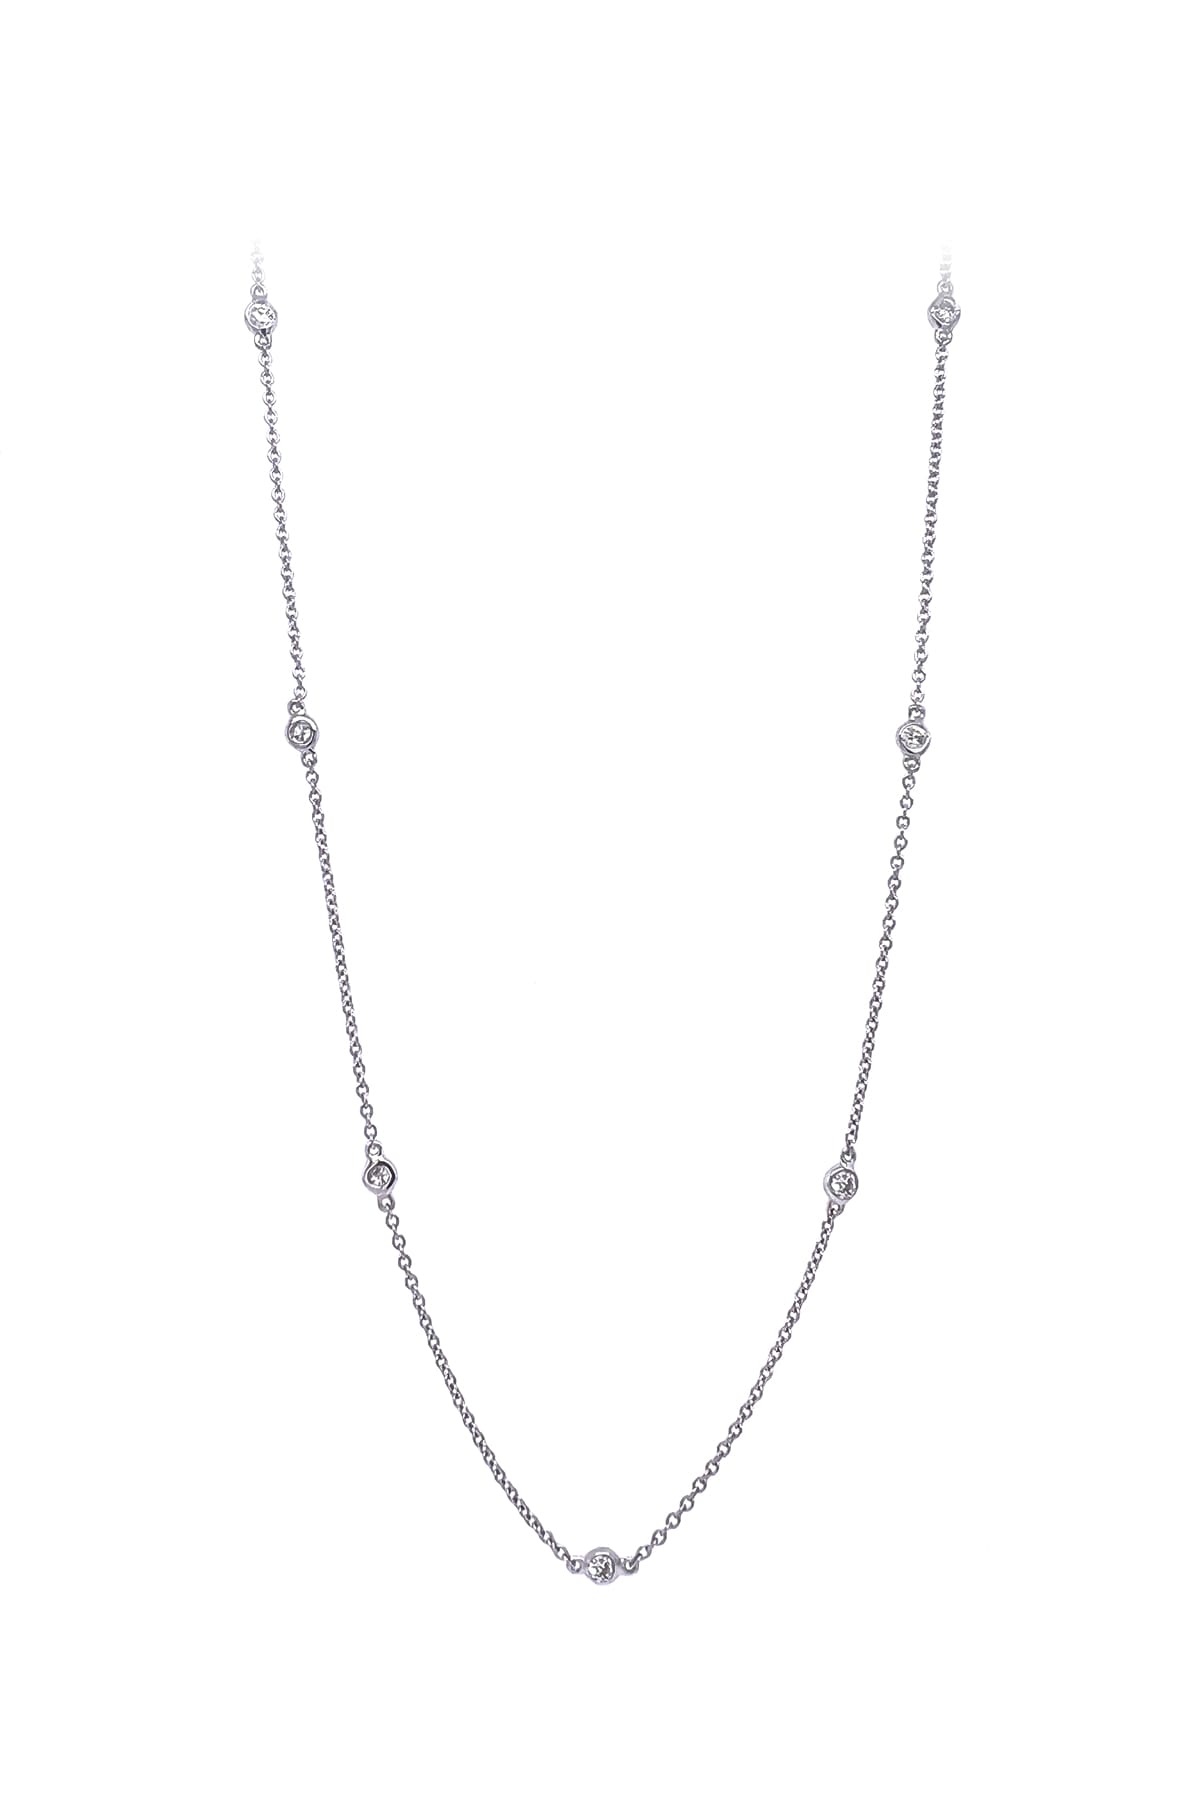 18 Carat White Gold Diamond Set Bezel Chain available at LeGassick Diamonds and Jewellery Gold Coast, Australia.